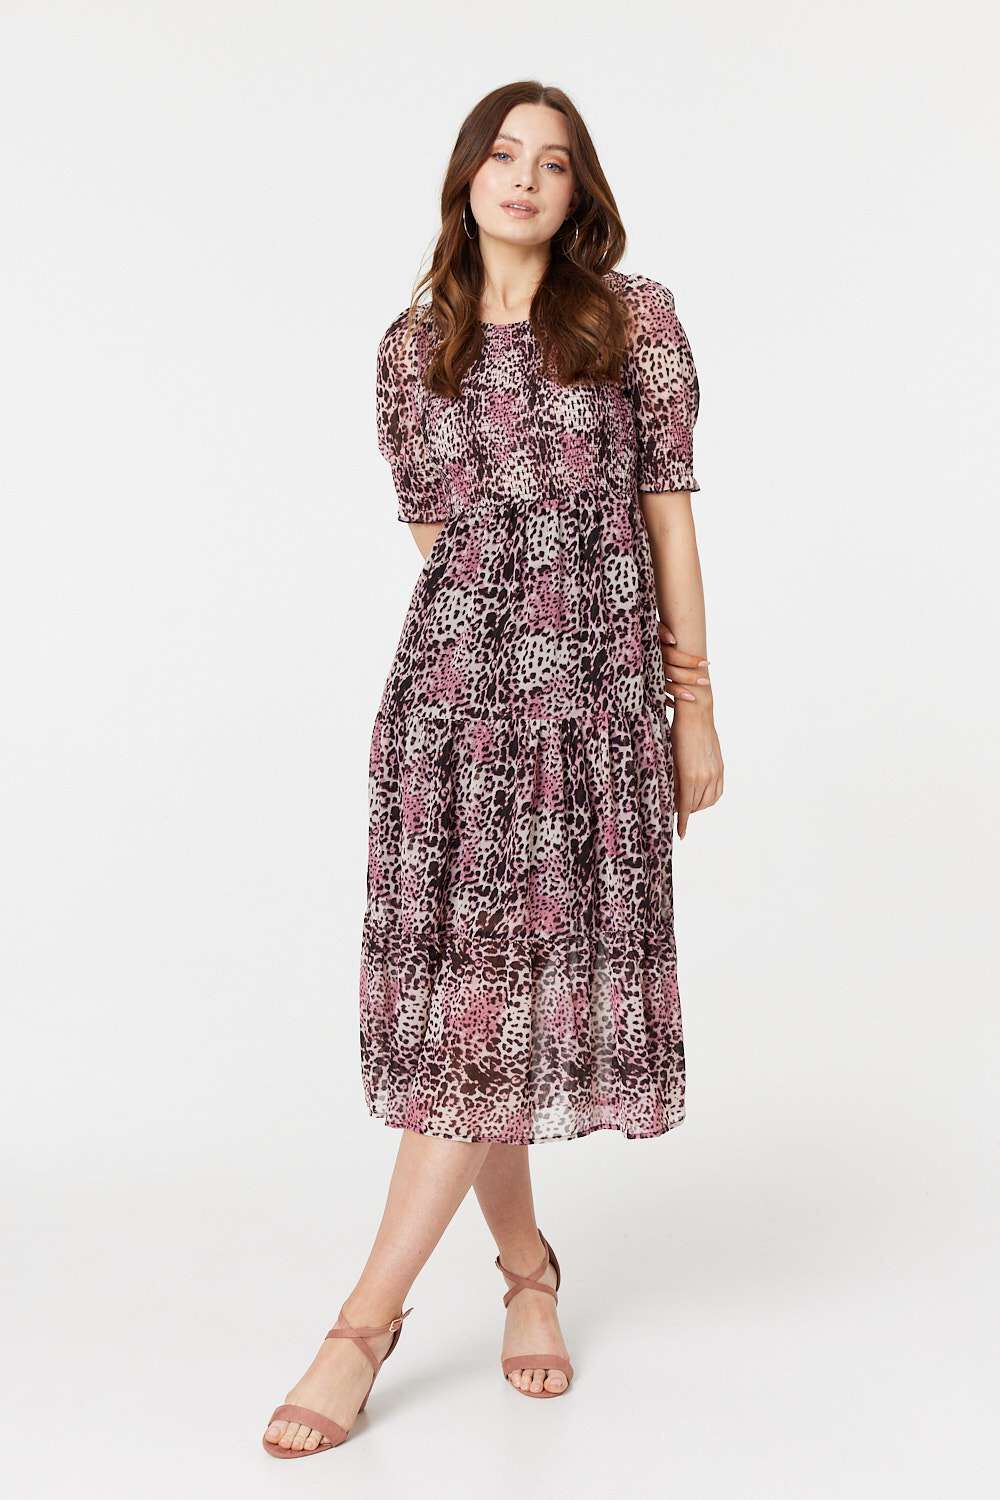 Izabel London Pink - Animal Print Midi Smock Dress, Size: 14